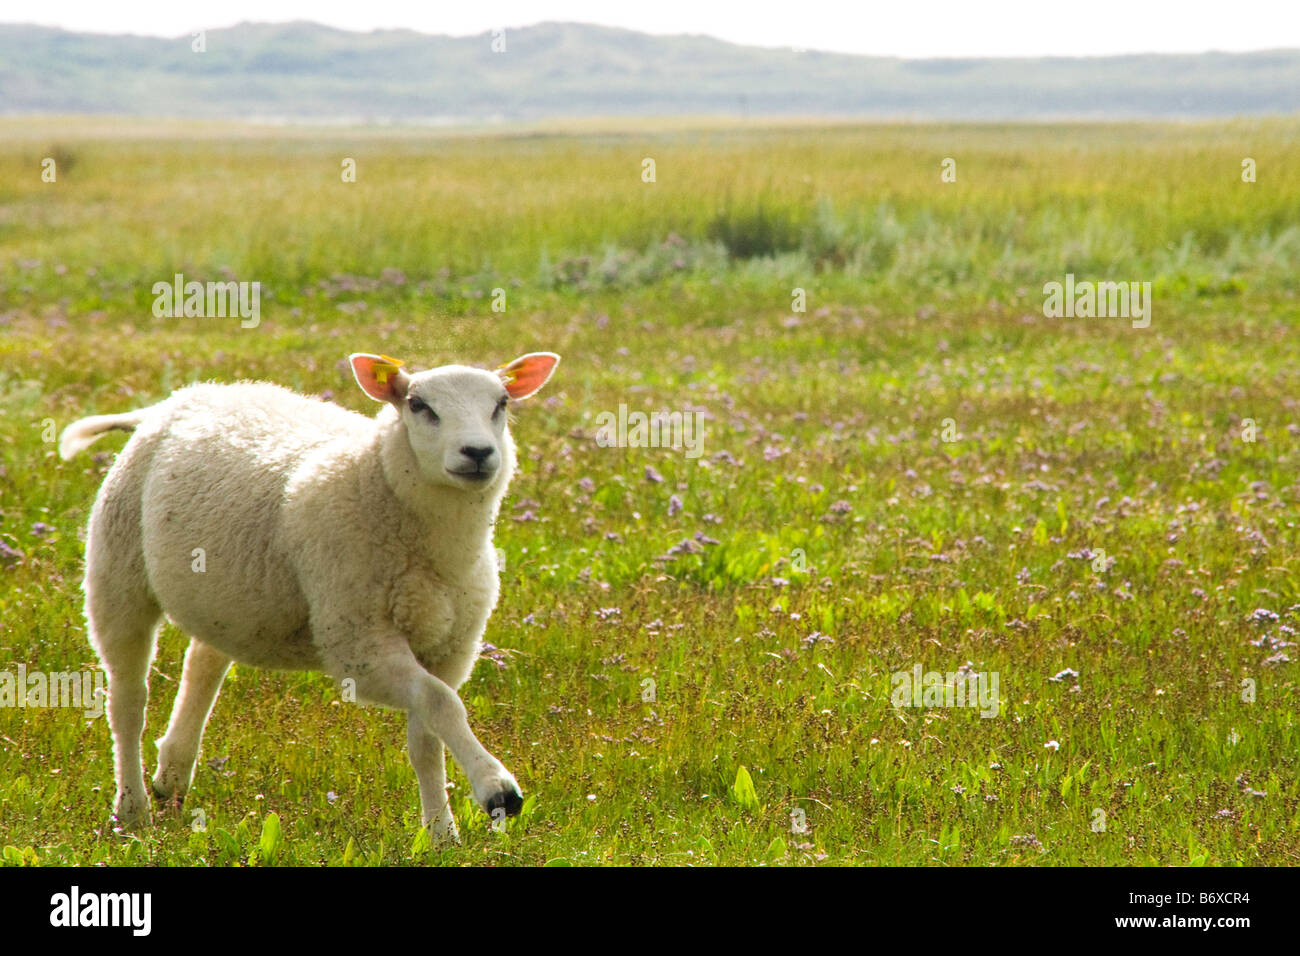 Texel Sheep running through an open landscape Stock Photo